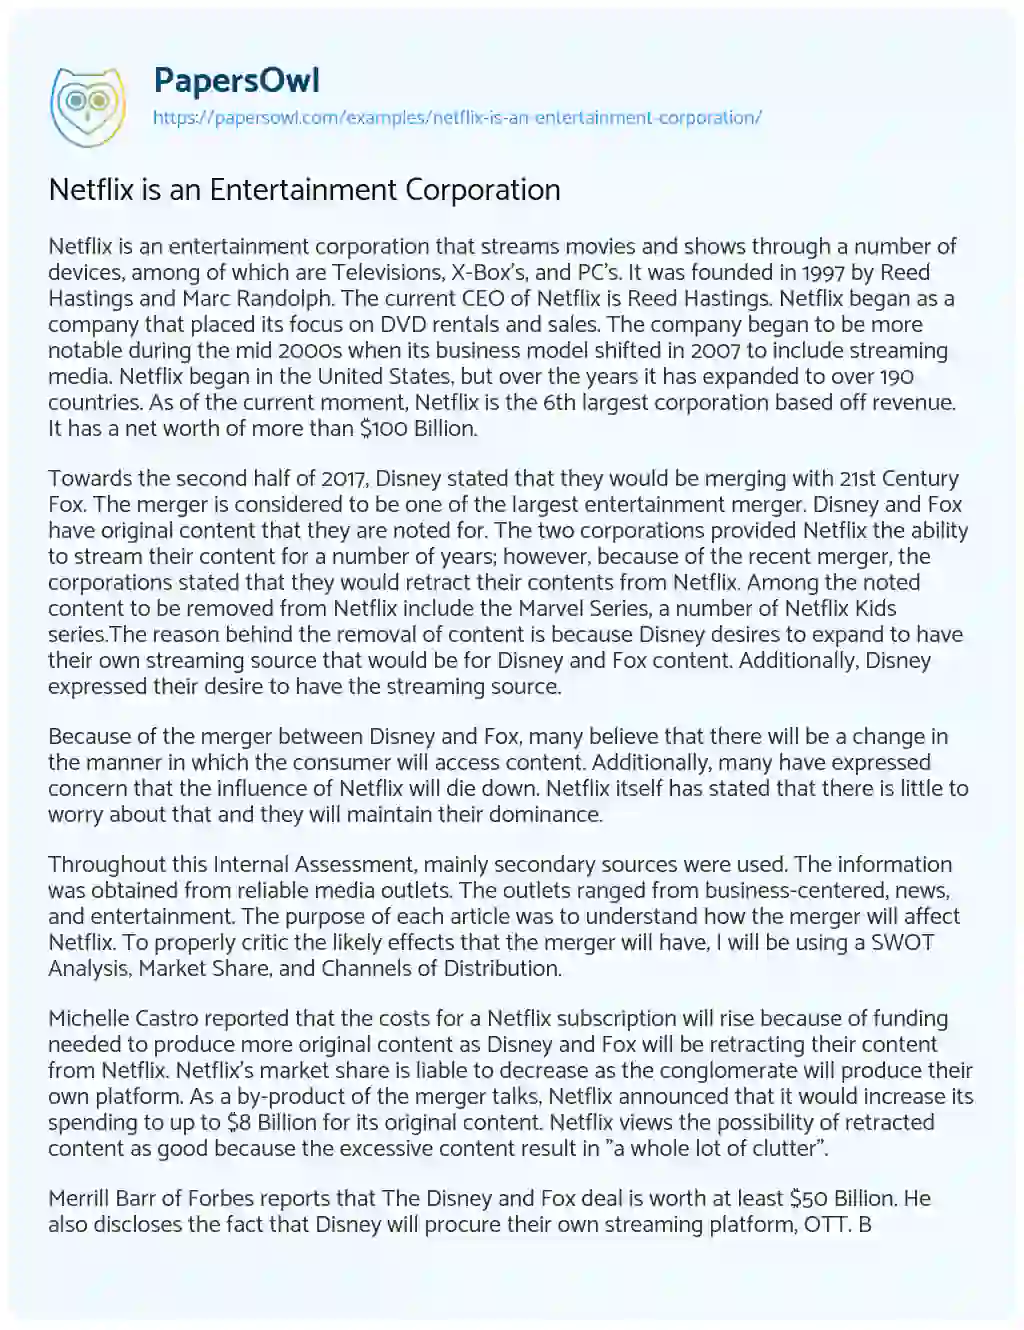 Netflix is an Entertainment Corporation essay